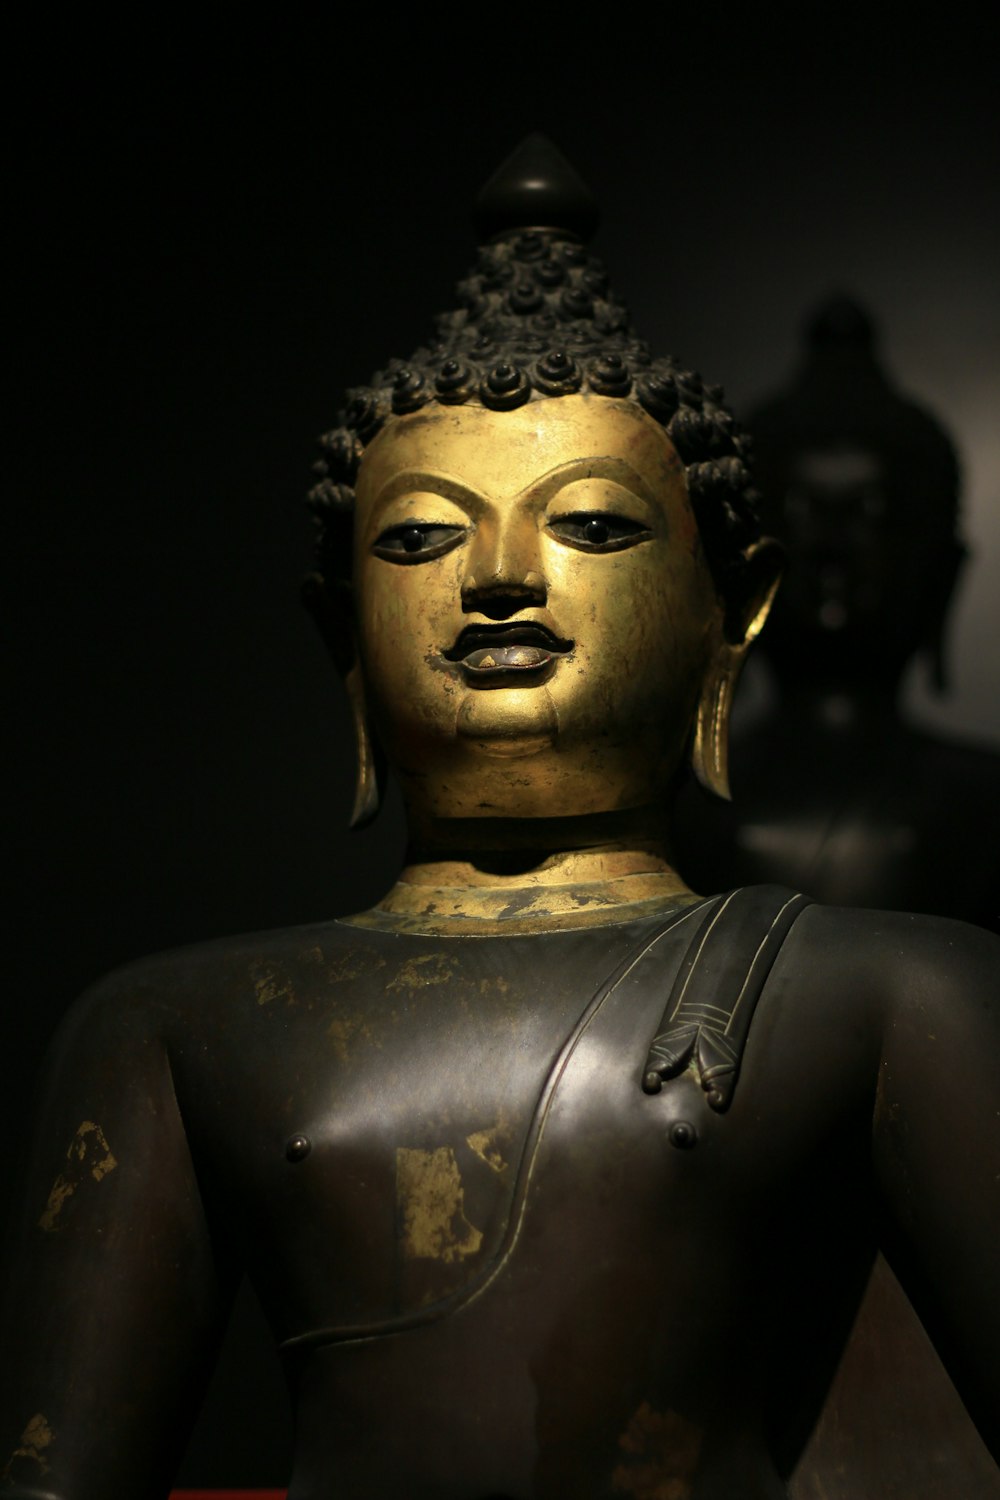 a golden buddha statue in a dark room